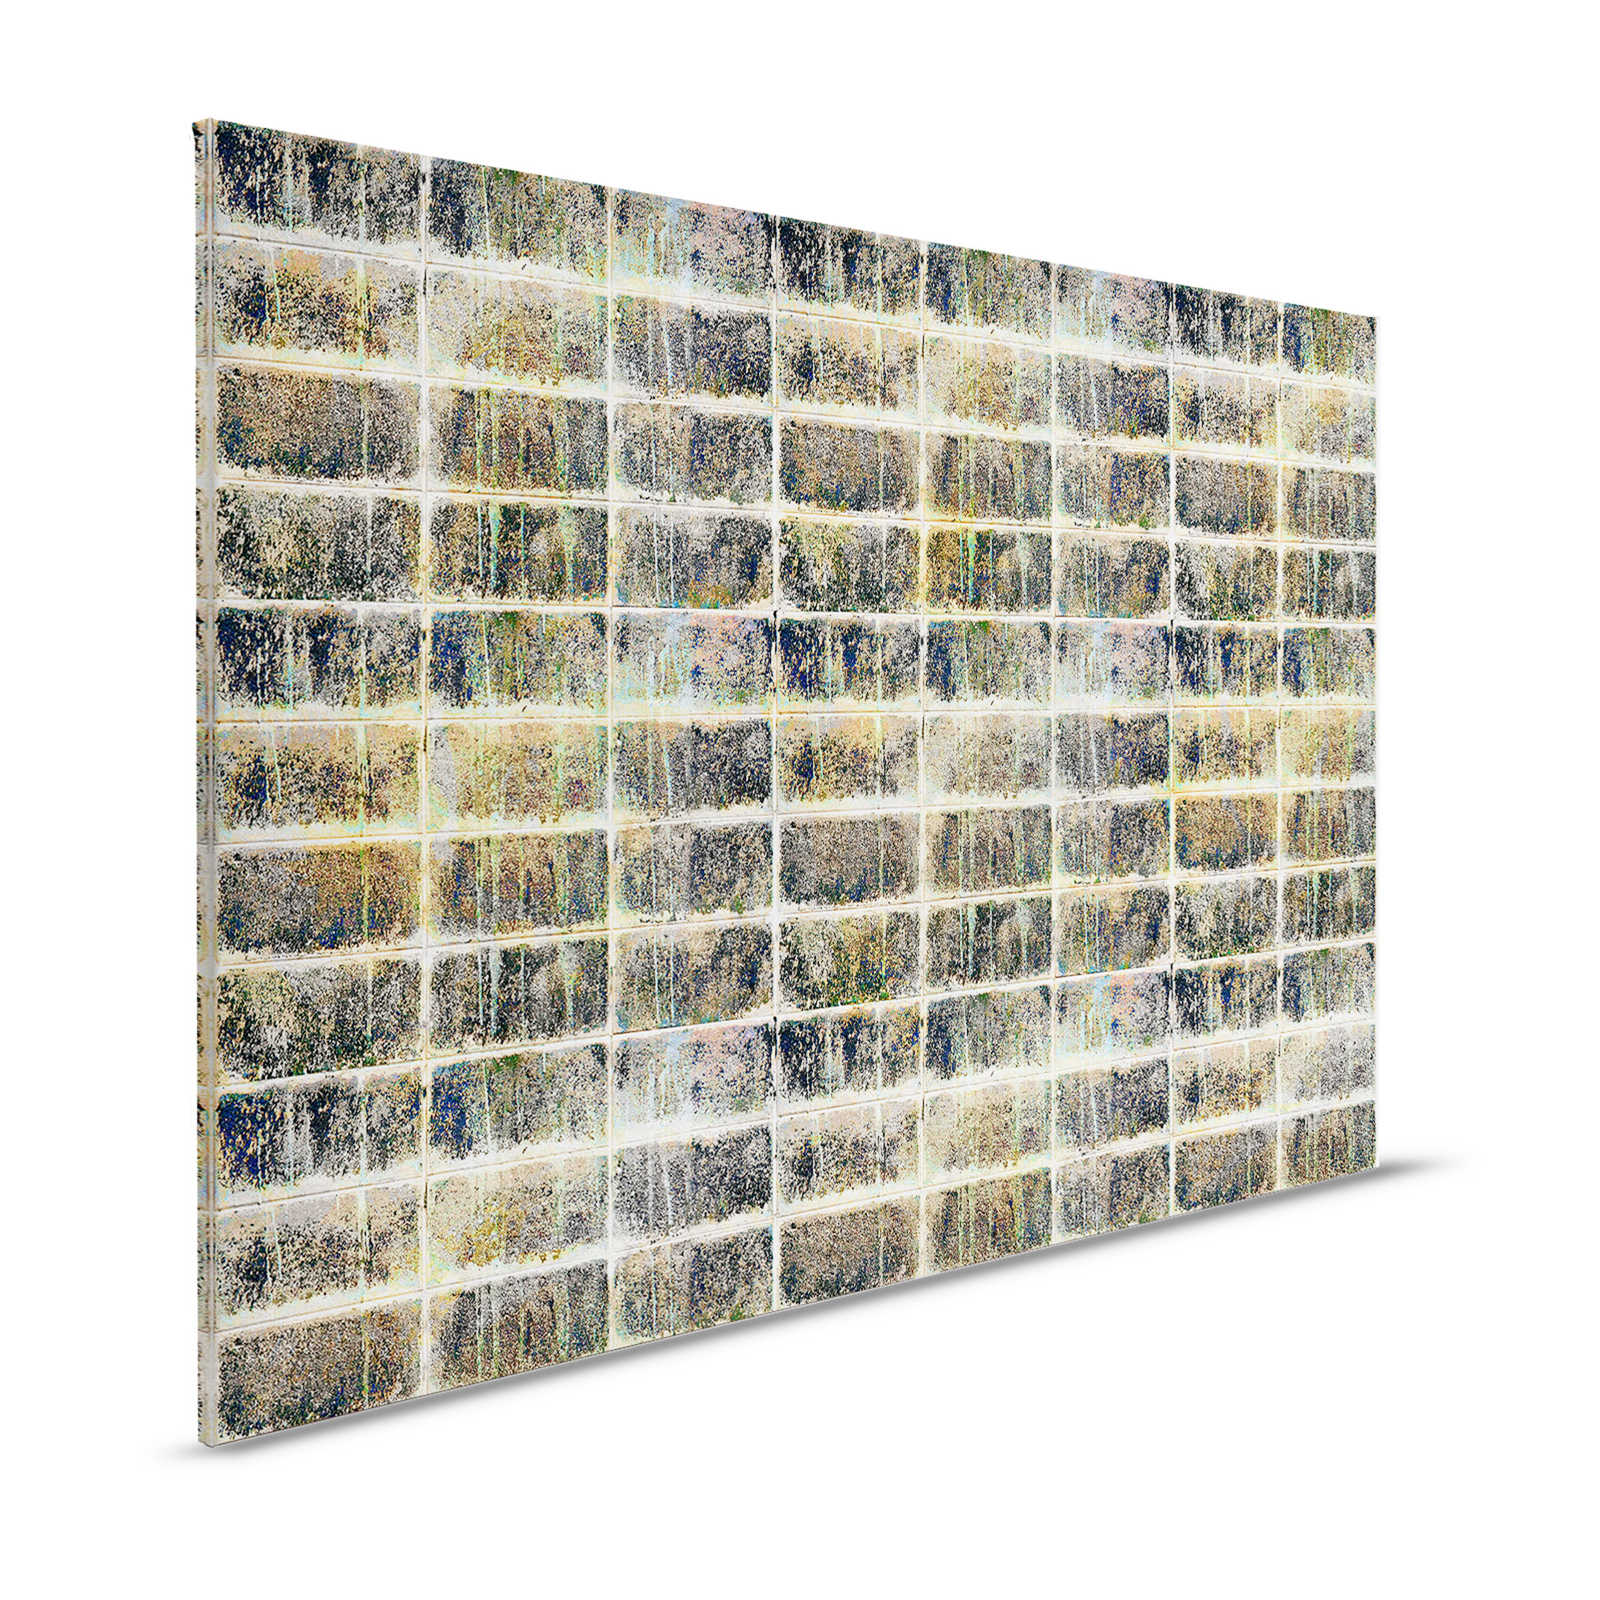 Factory 1 - Canvas painting Used Optics Tile Mirror Industrial Design - 1.20 m x 0.80 m
